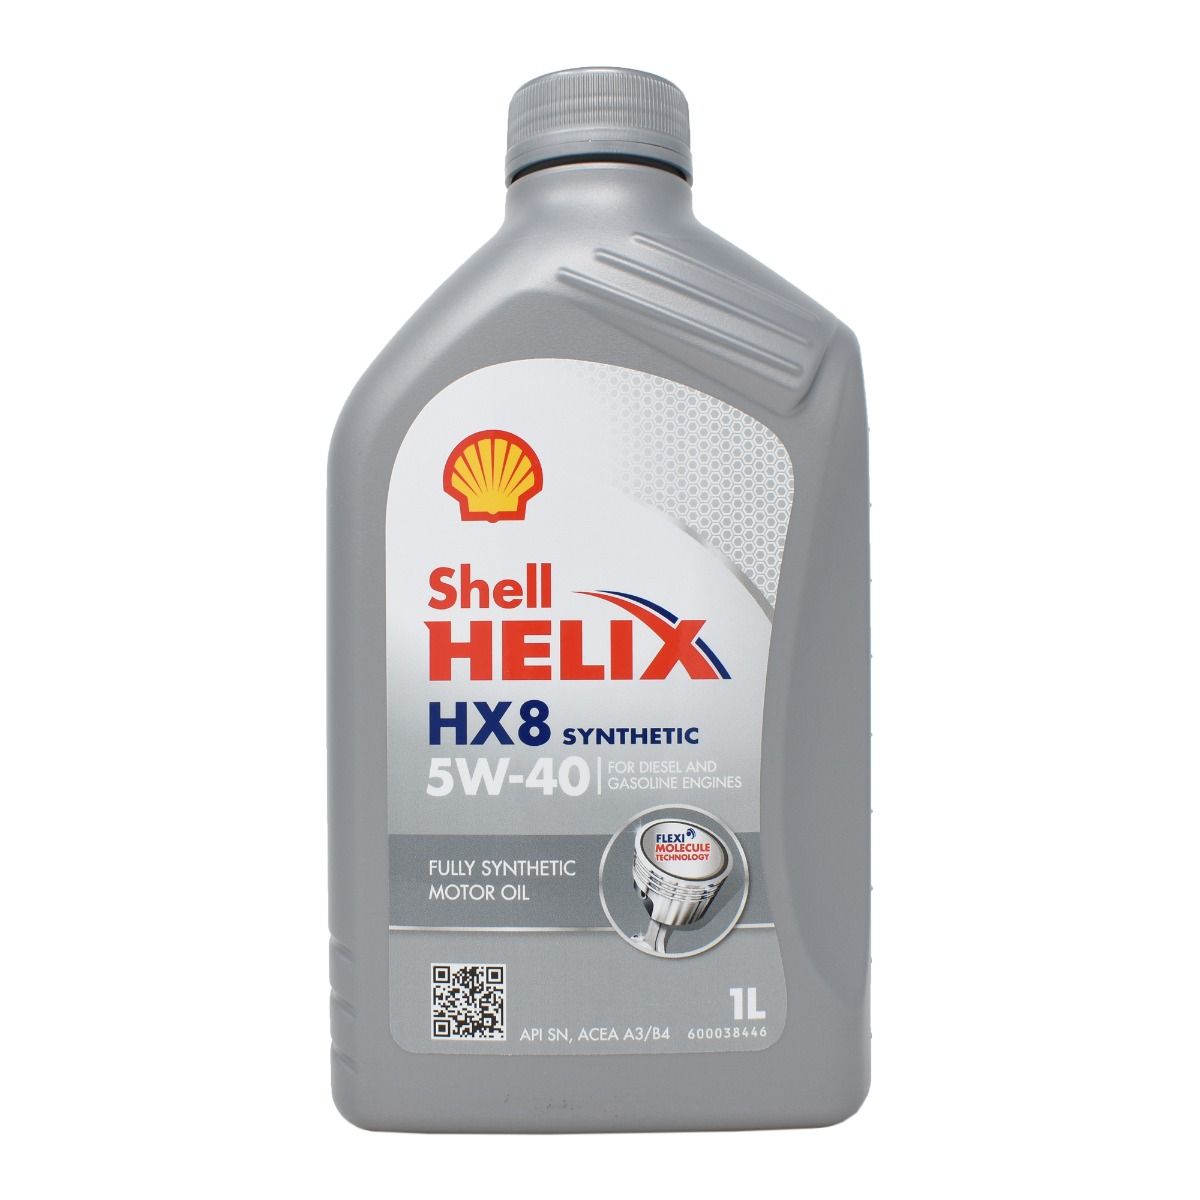 Buy Shell HELIX HX8 5W-40 at ATO24 ❗